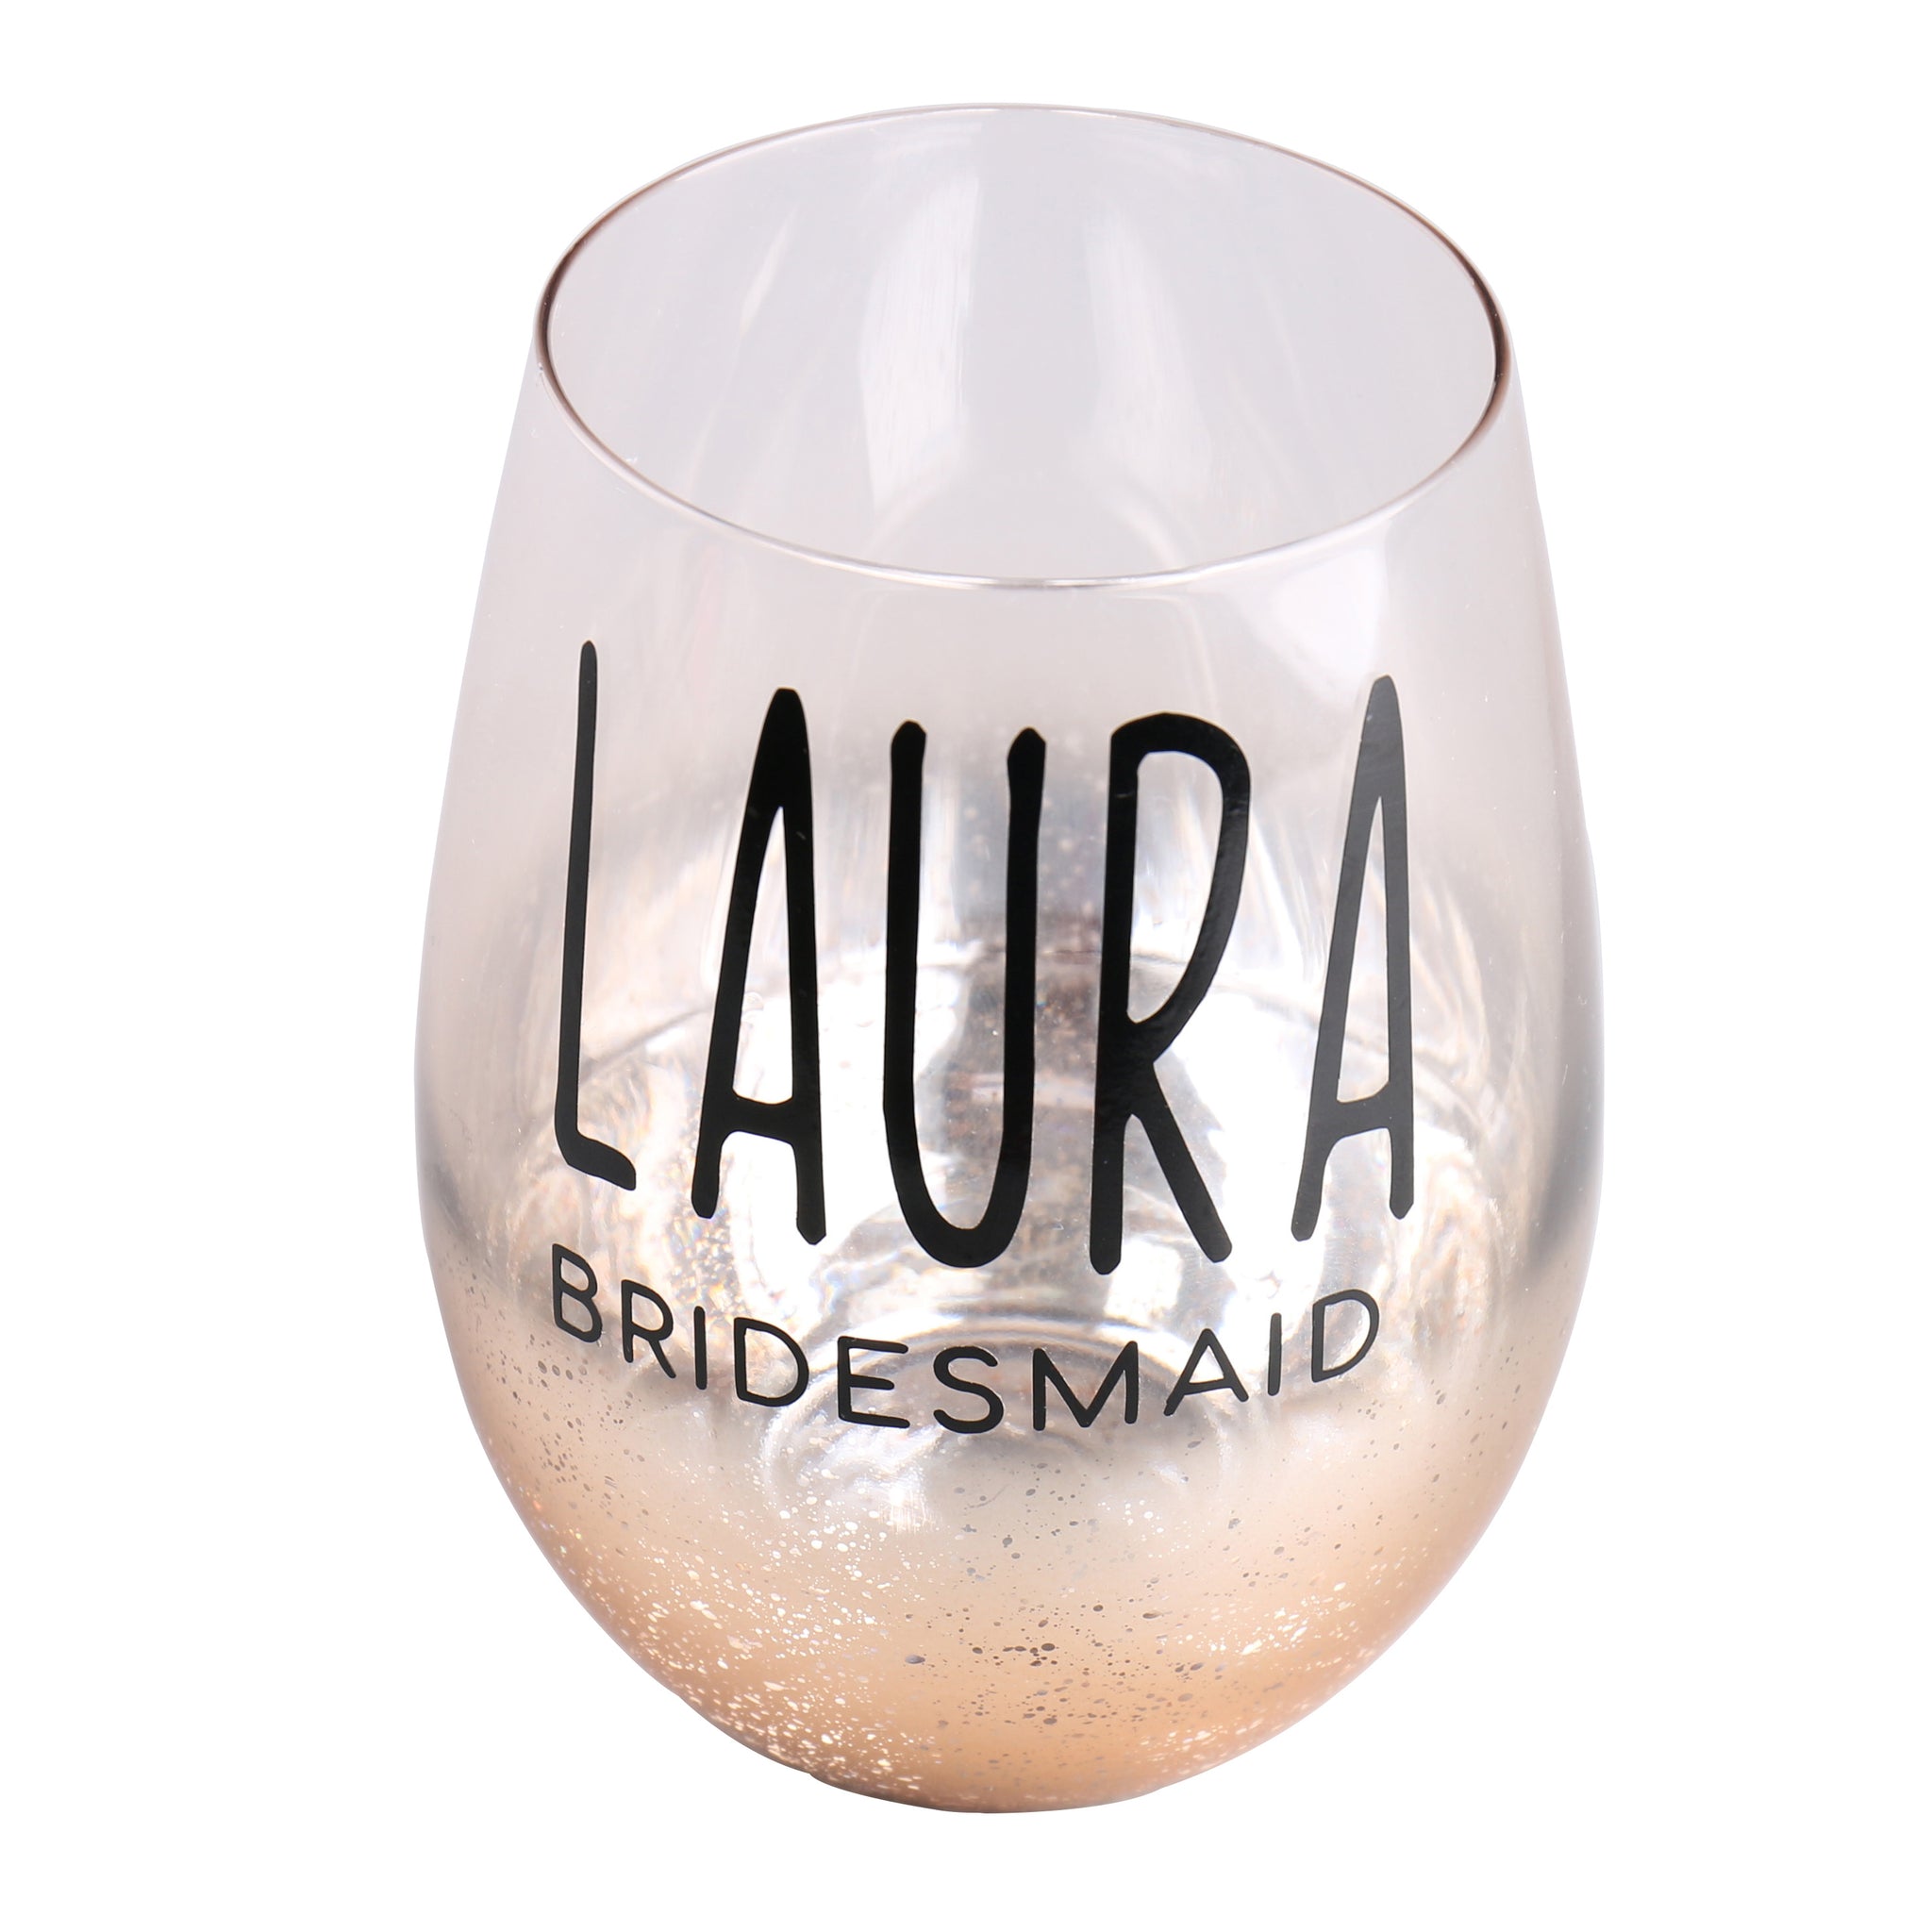 Rose Gold Wine Tumbler, Custom Wine Glasses, Personalize Wine